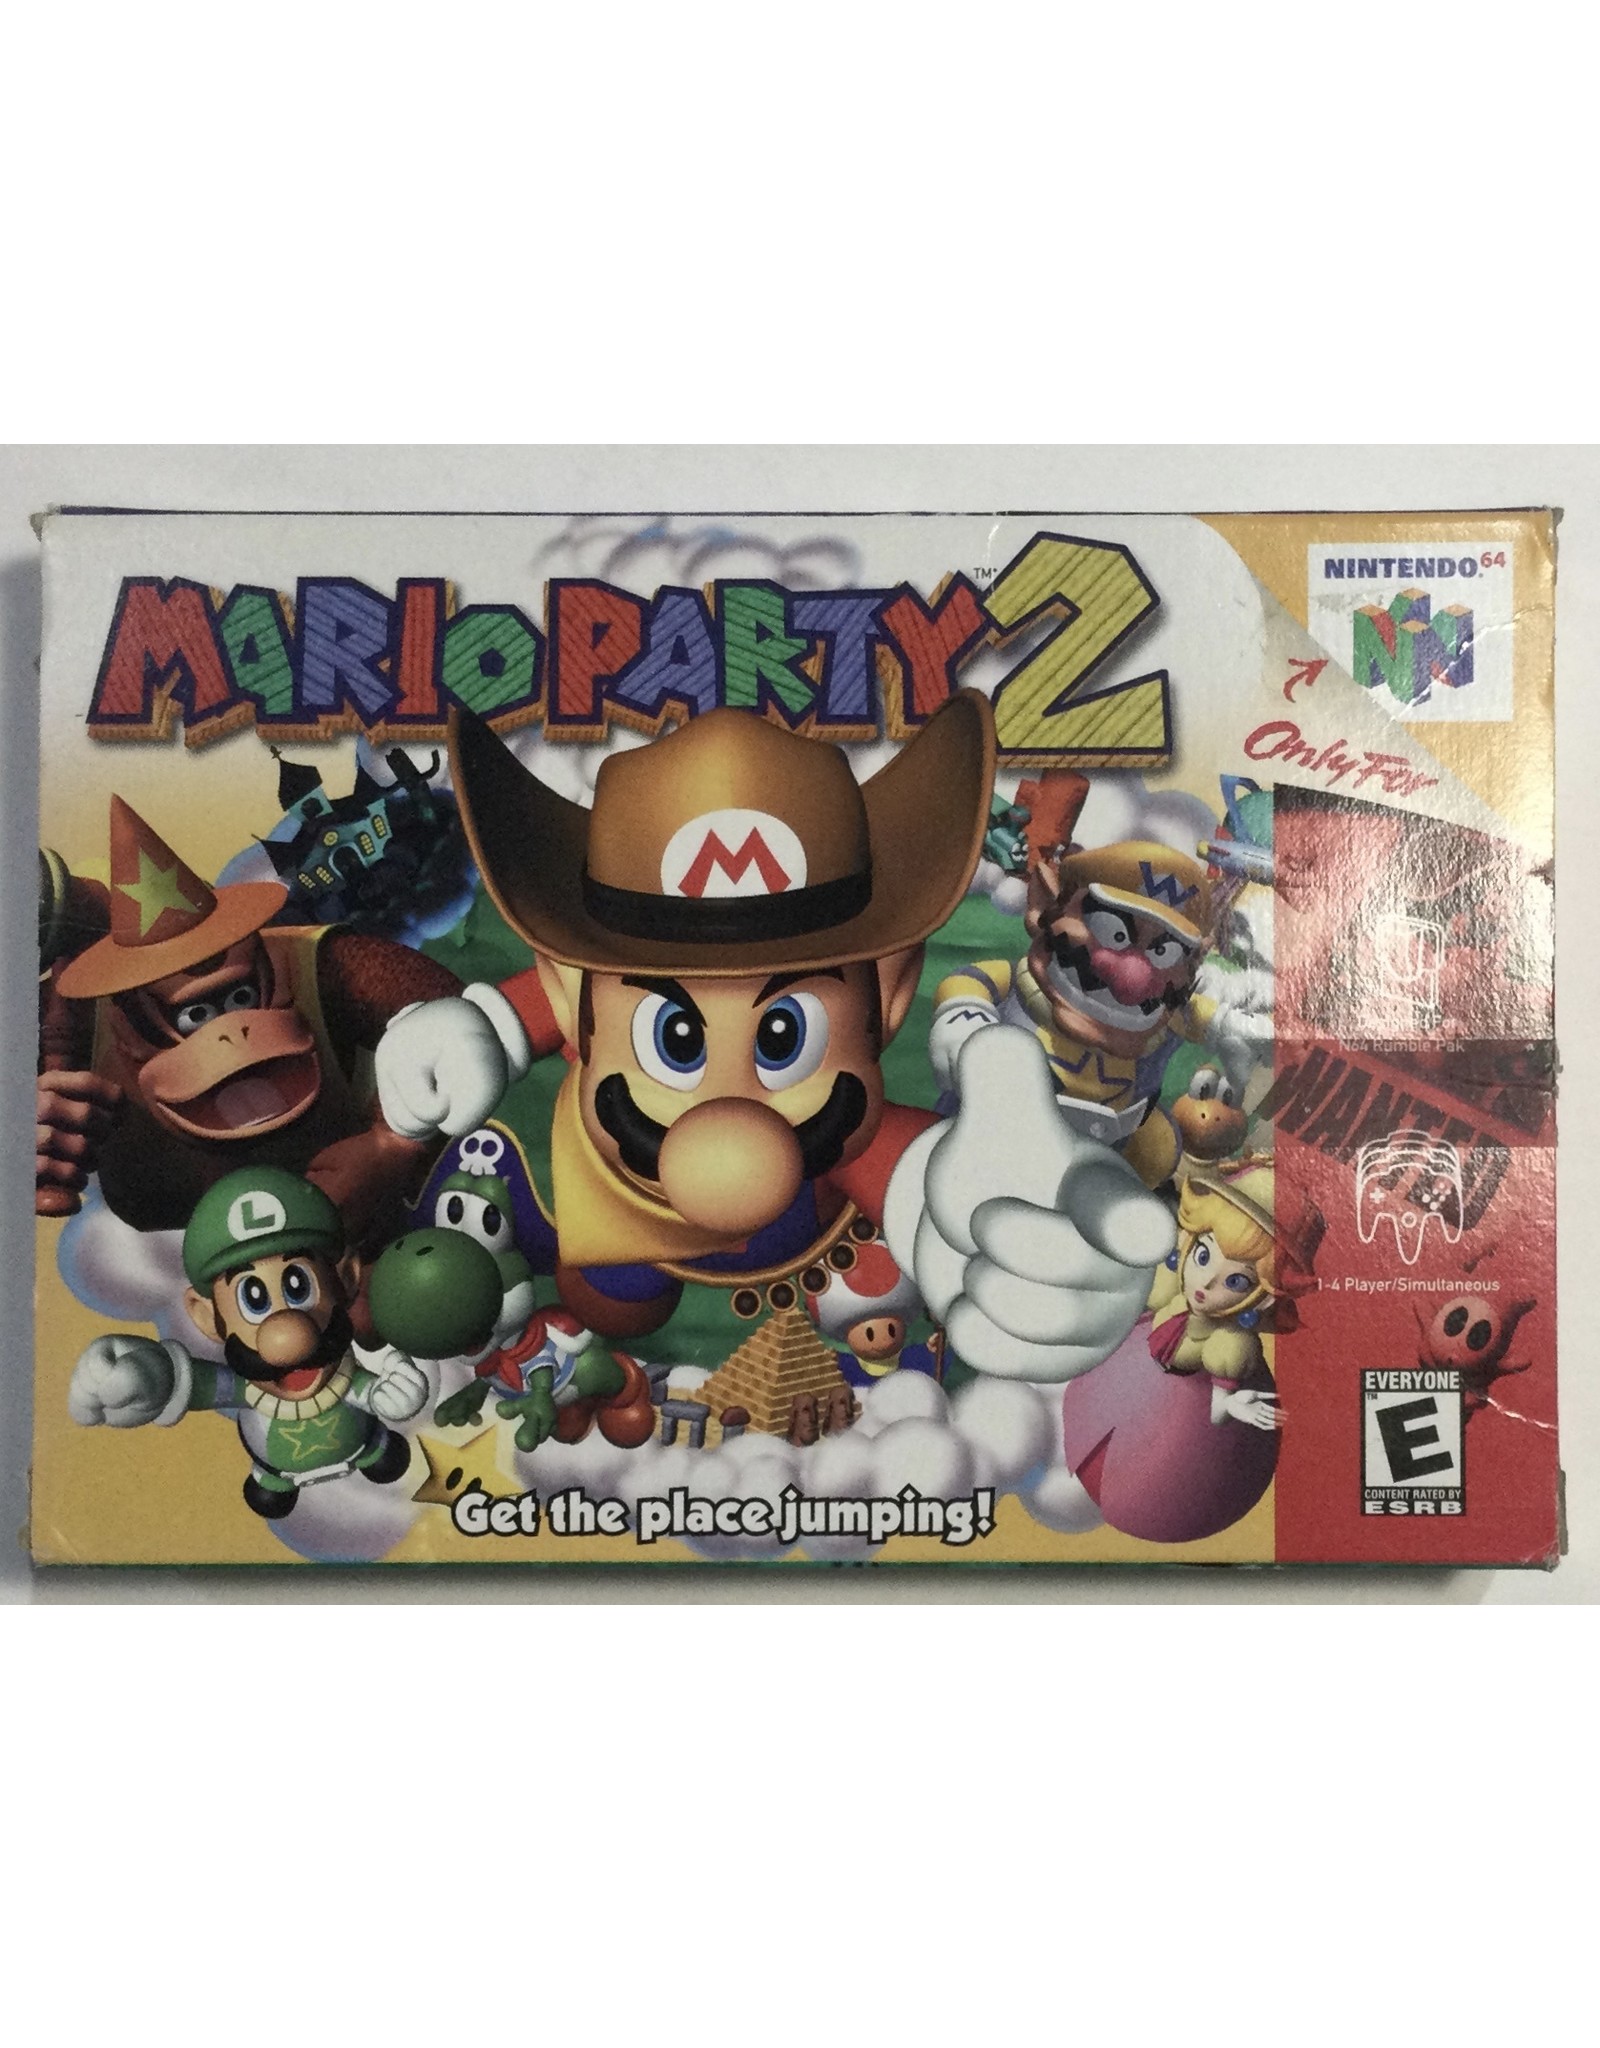 Nintendo Mario Party 2 for Nintendo 64 (N64)